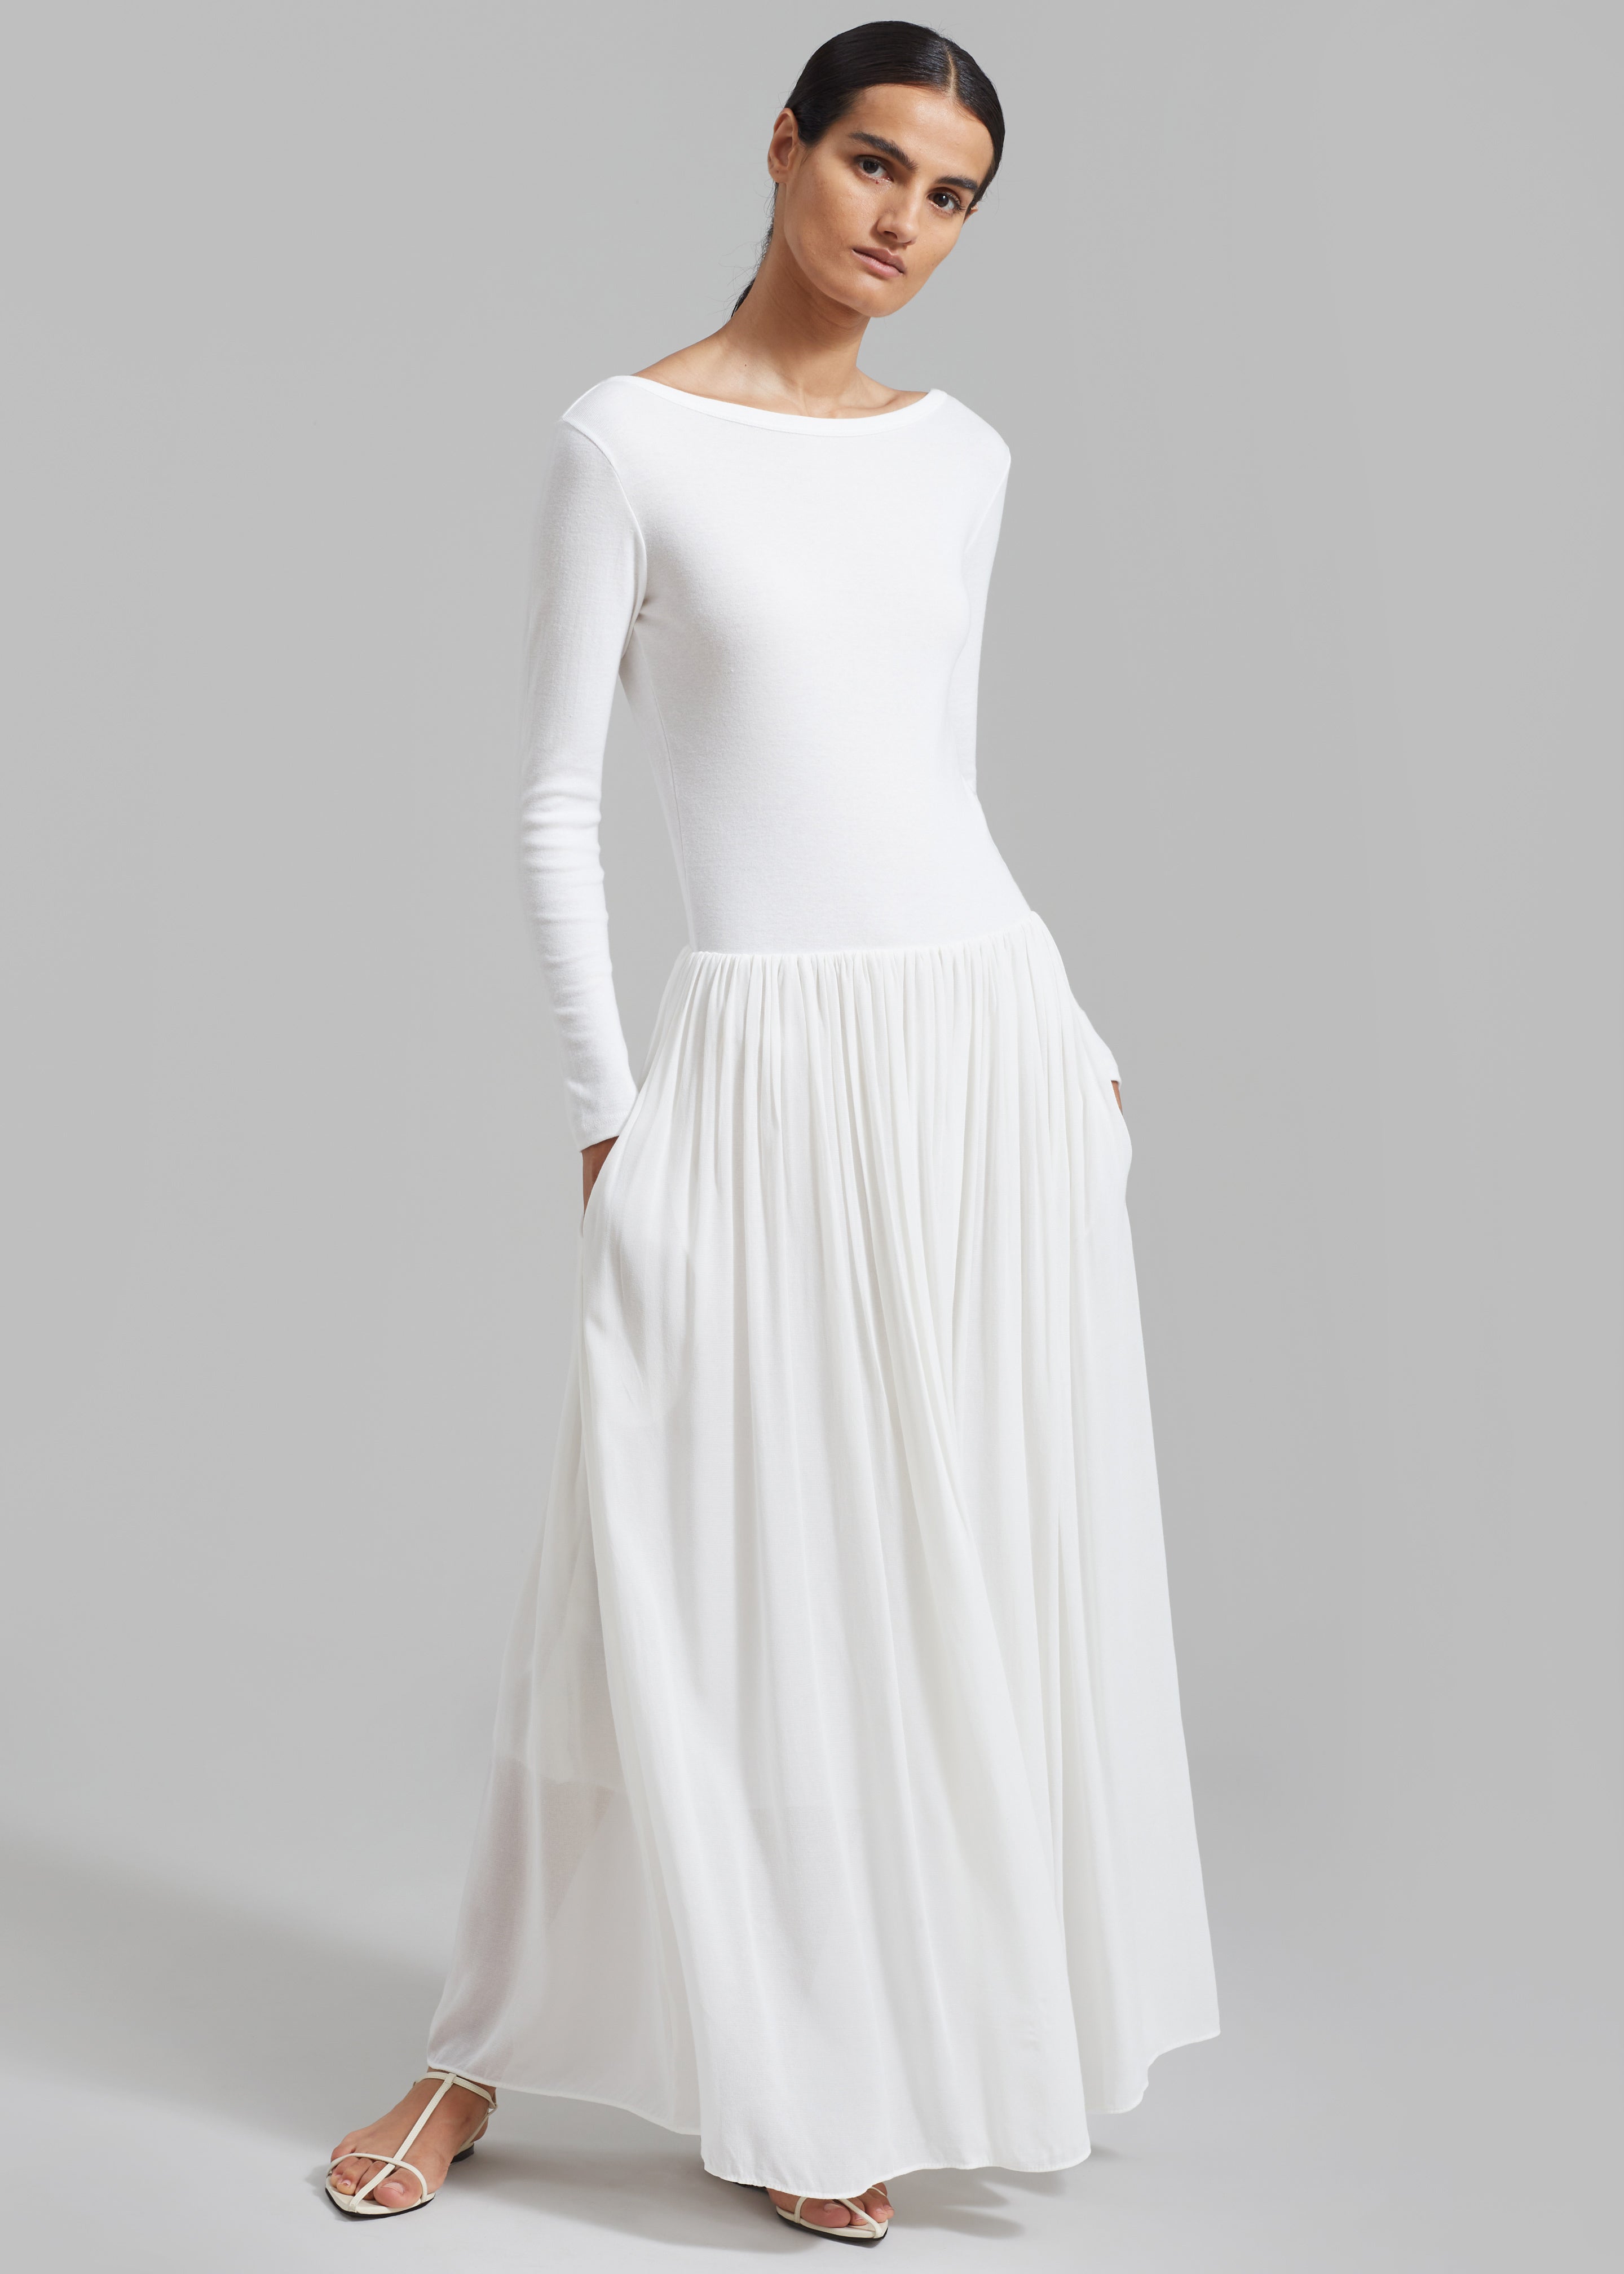 Odette Gathered Skirt Maxi Dress - White - 2